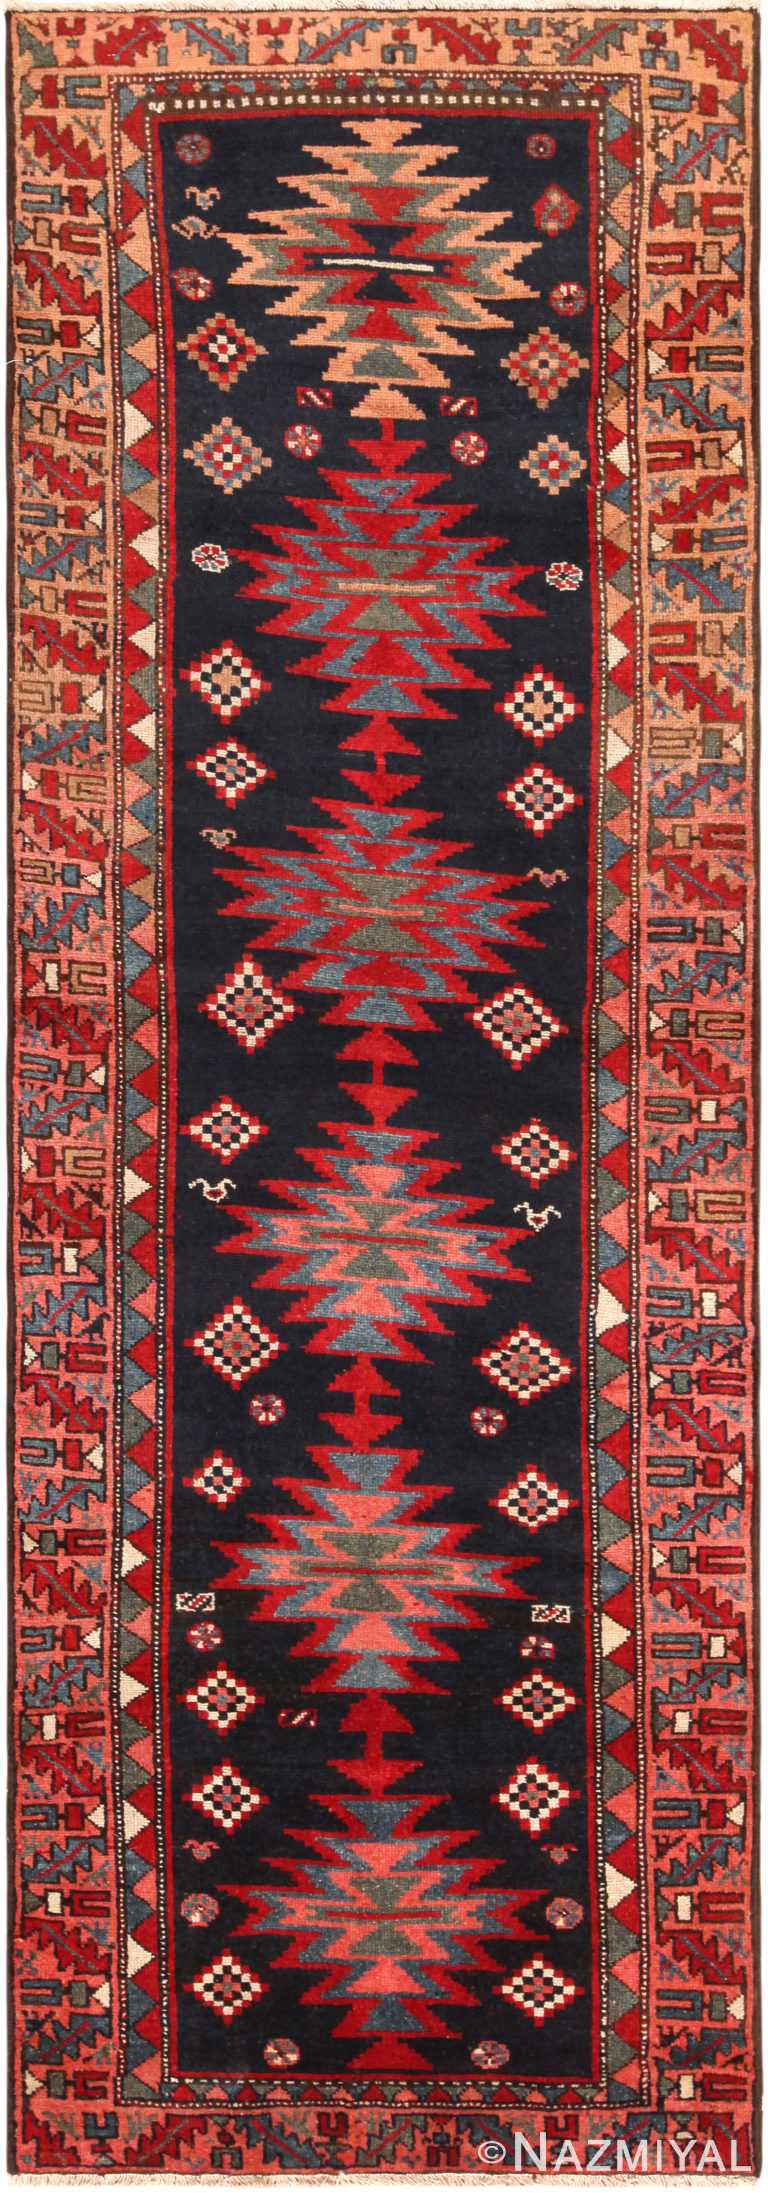 Antique Persian Heriz Tribal Runner Rug 72050 by Nazmiyal Antique Rugs